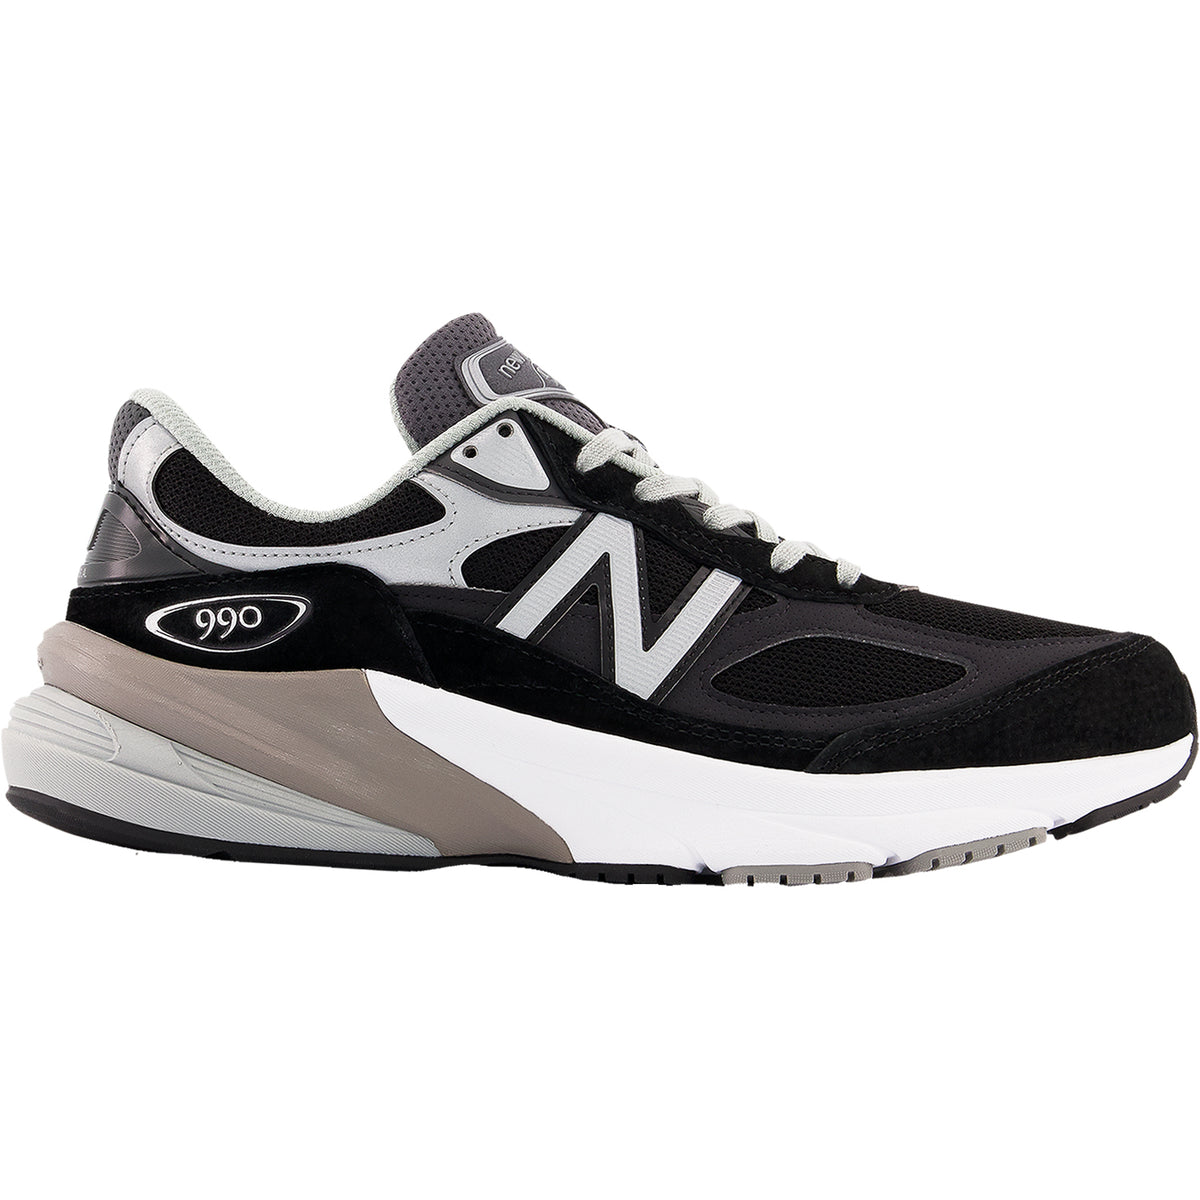 New Balance W990v6 Black | Women's Running Shoes | Footwear etc.